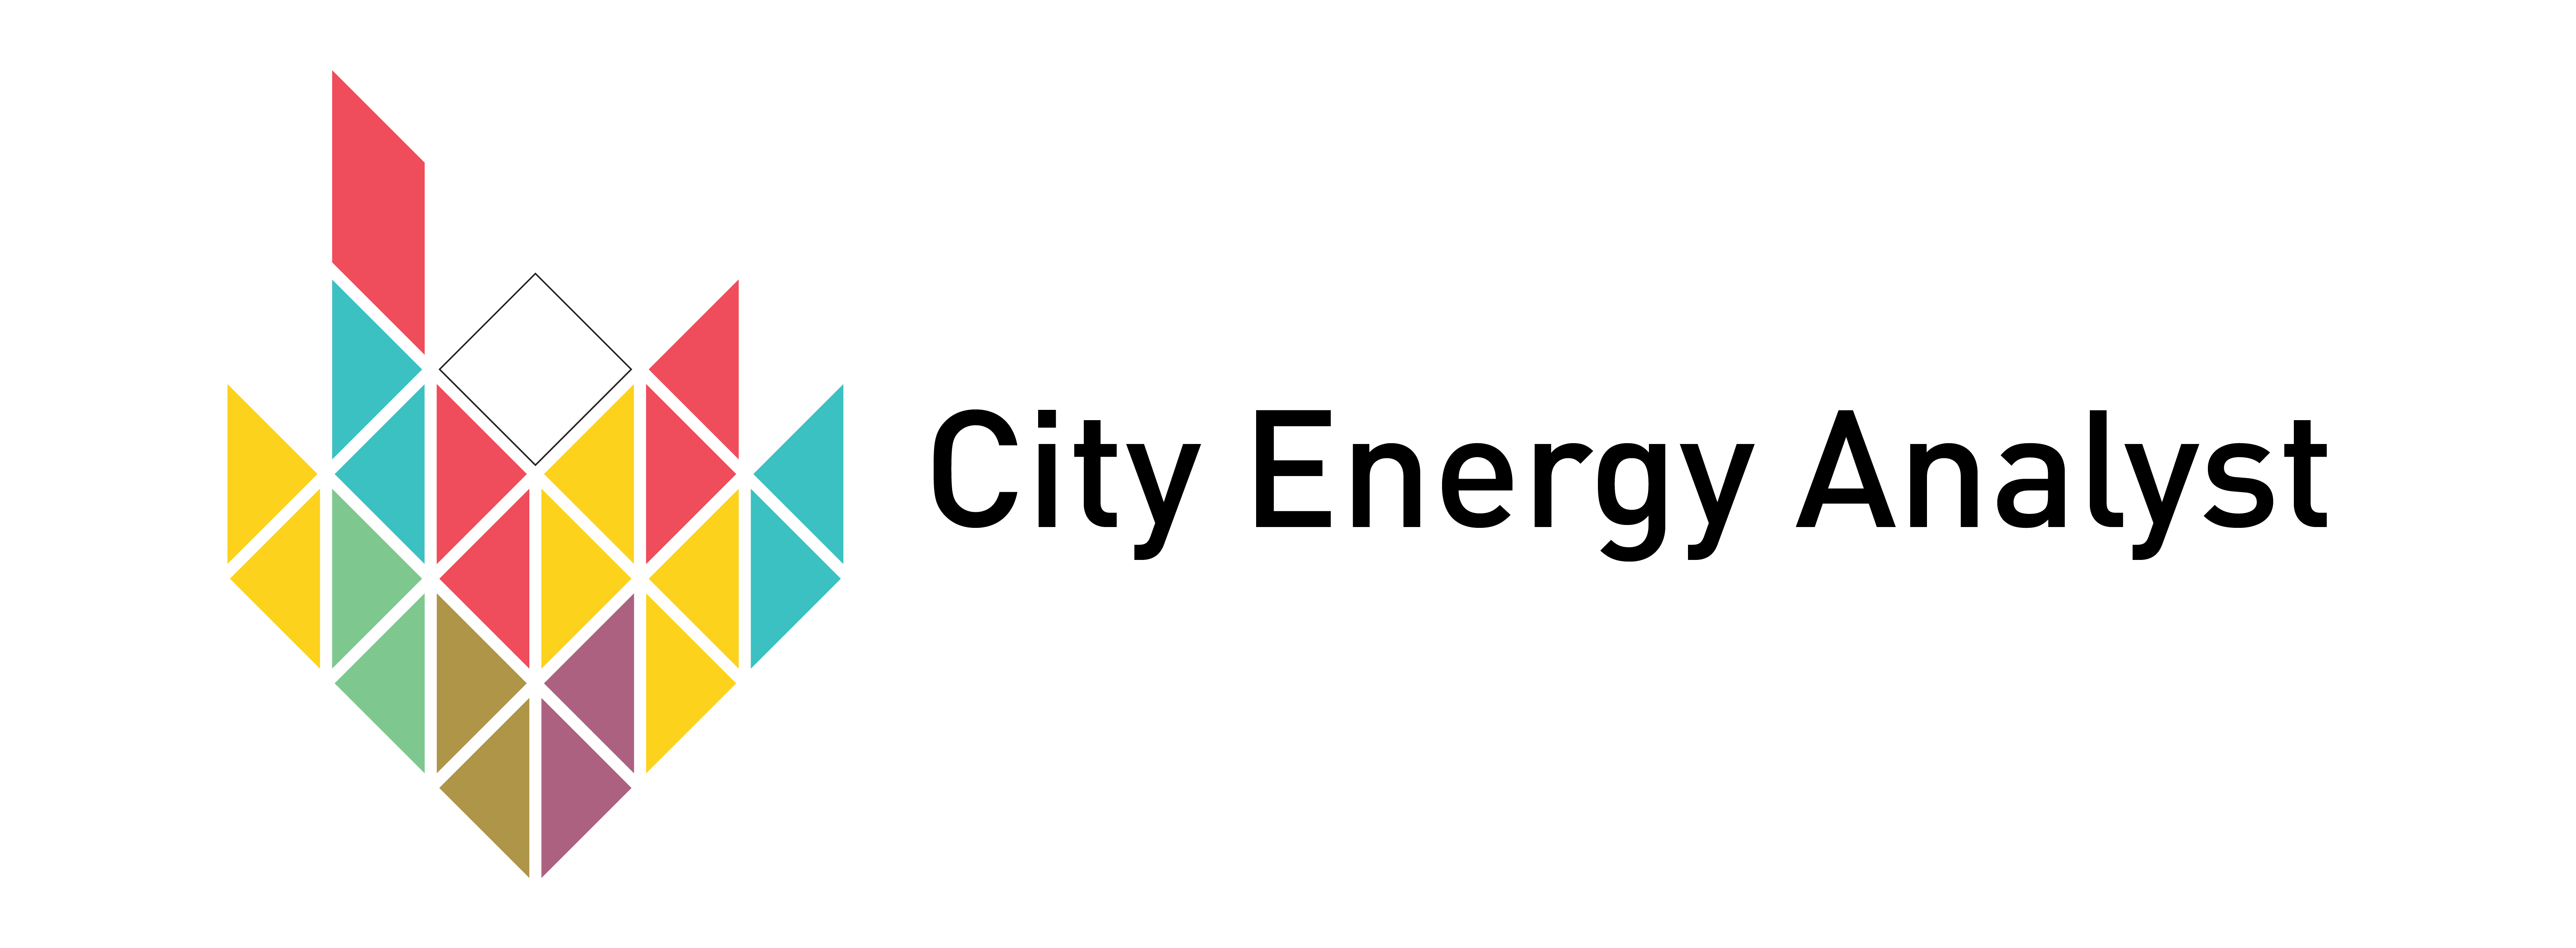 City Energy Analyst (CEA) logo